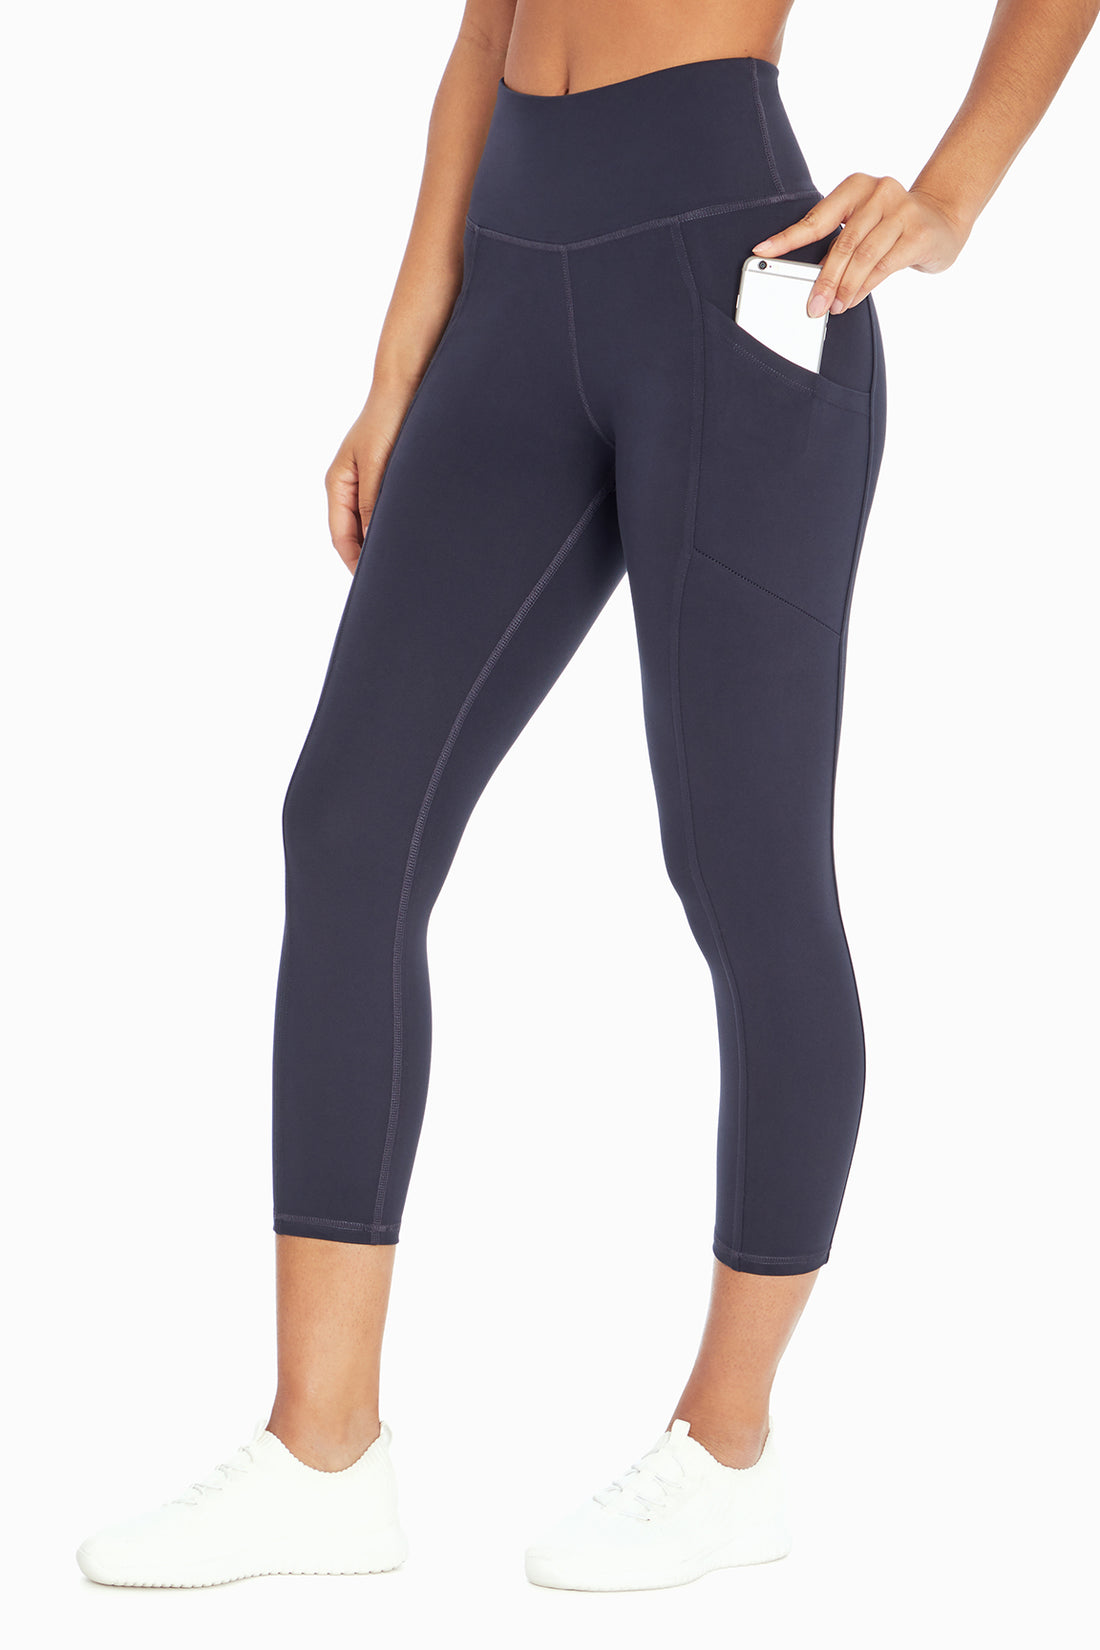 Marika Tummy Control Pockets Capri Leggings 22 Black XL Activewear Yoga  Gym for sale online